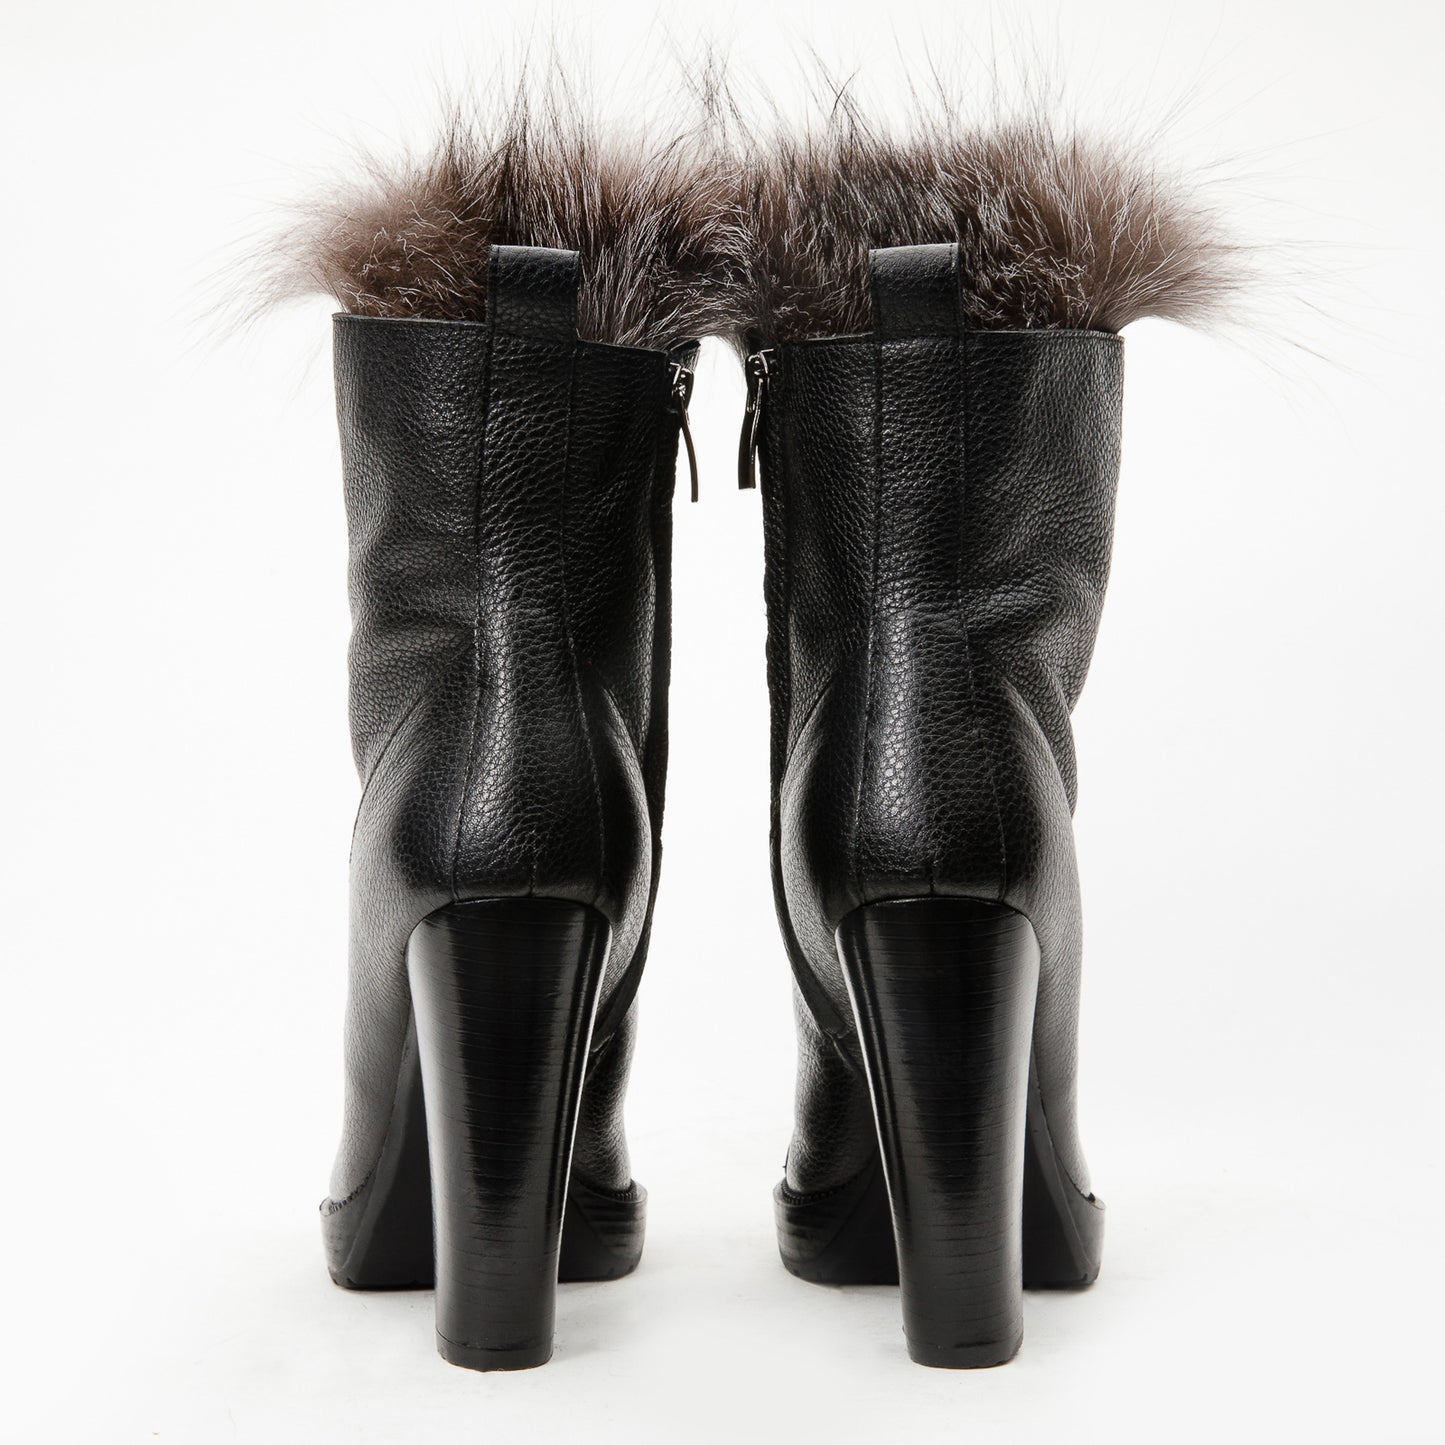 The Melo Black Leather Natural Fur Mid Calf Platform Heel Women Boot